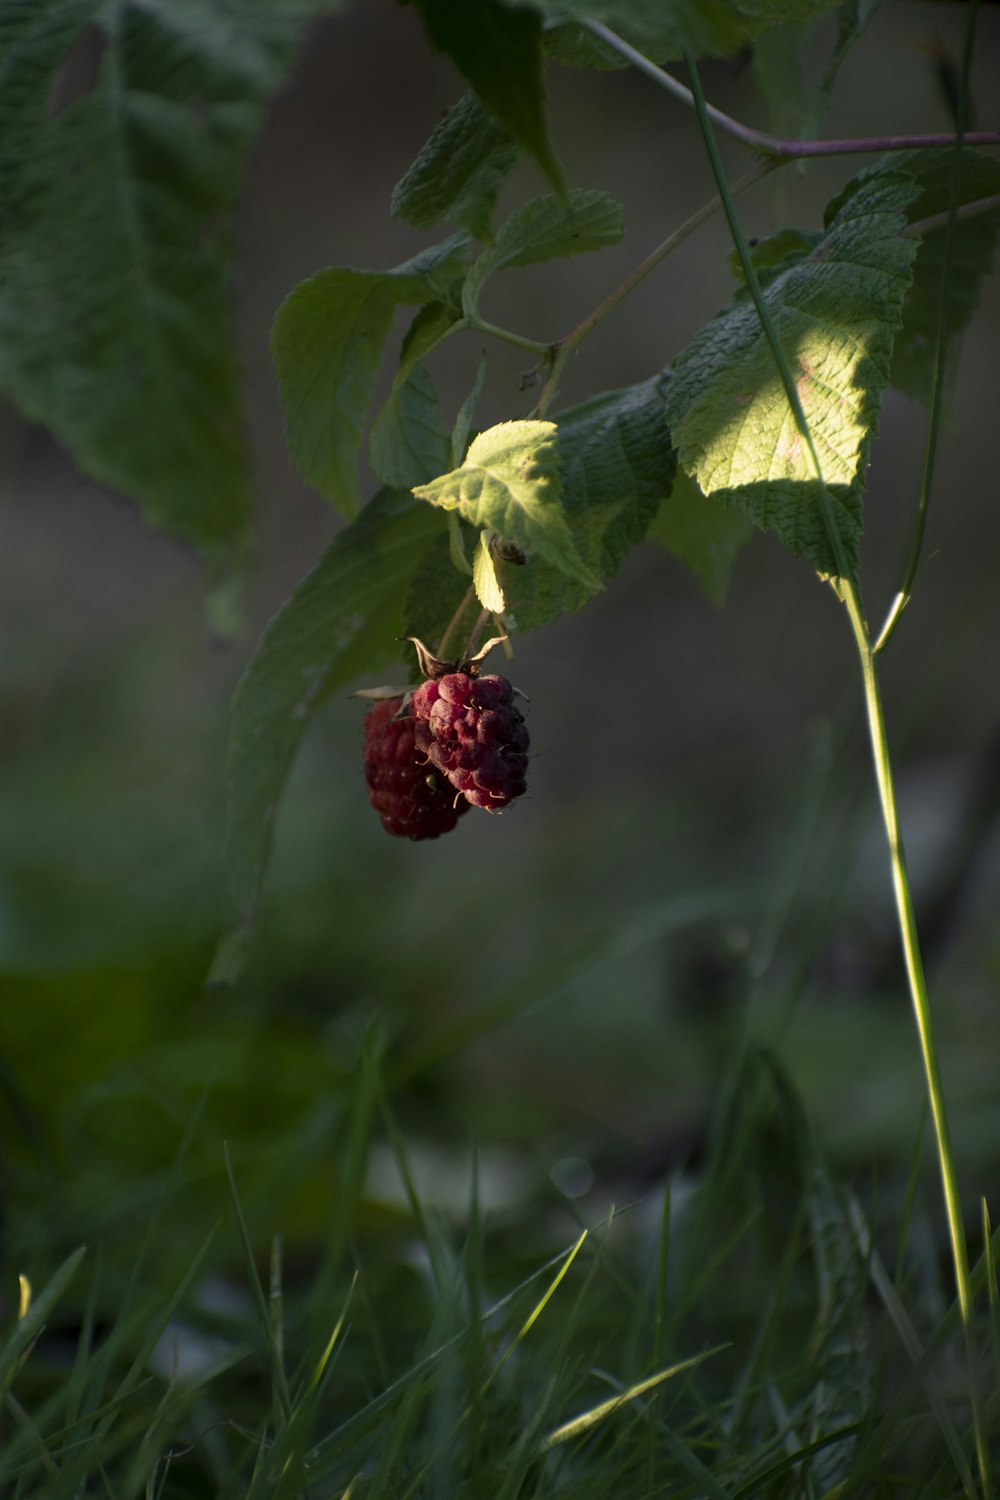 a close up of a berry